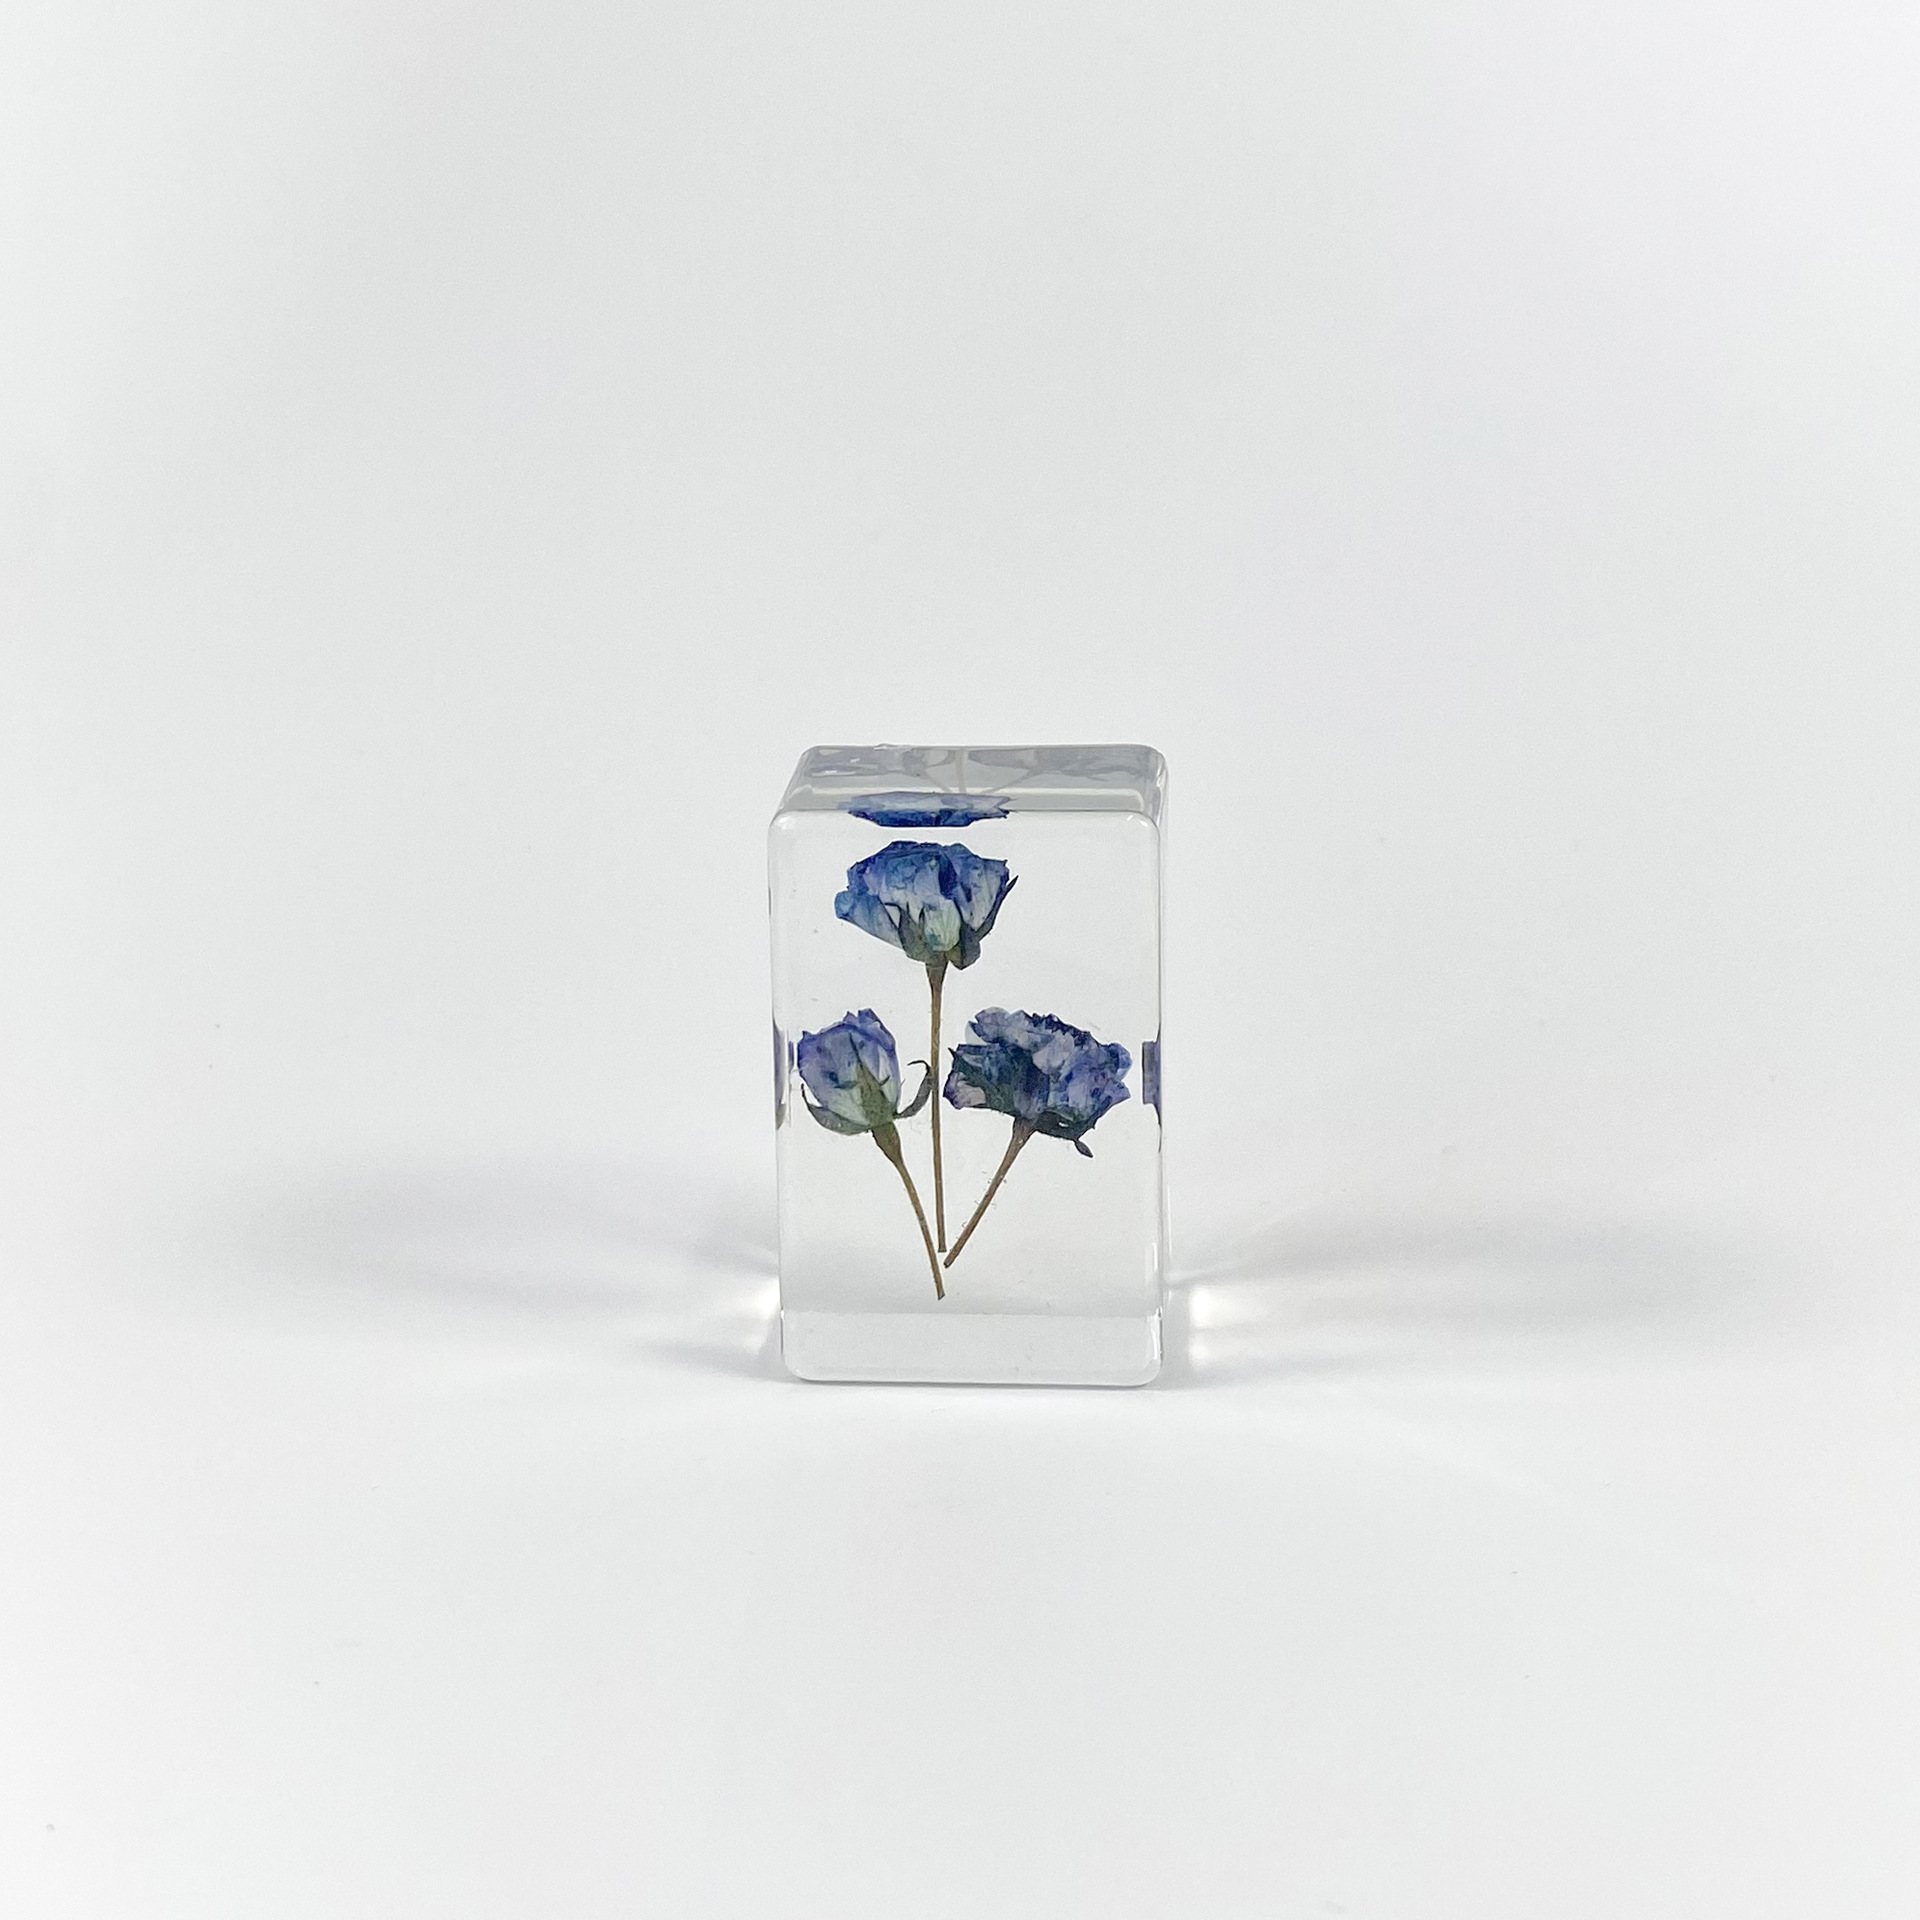 3:Little blue rose